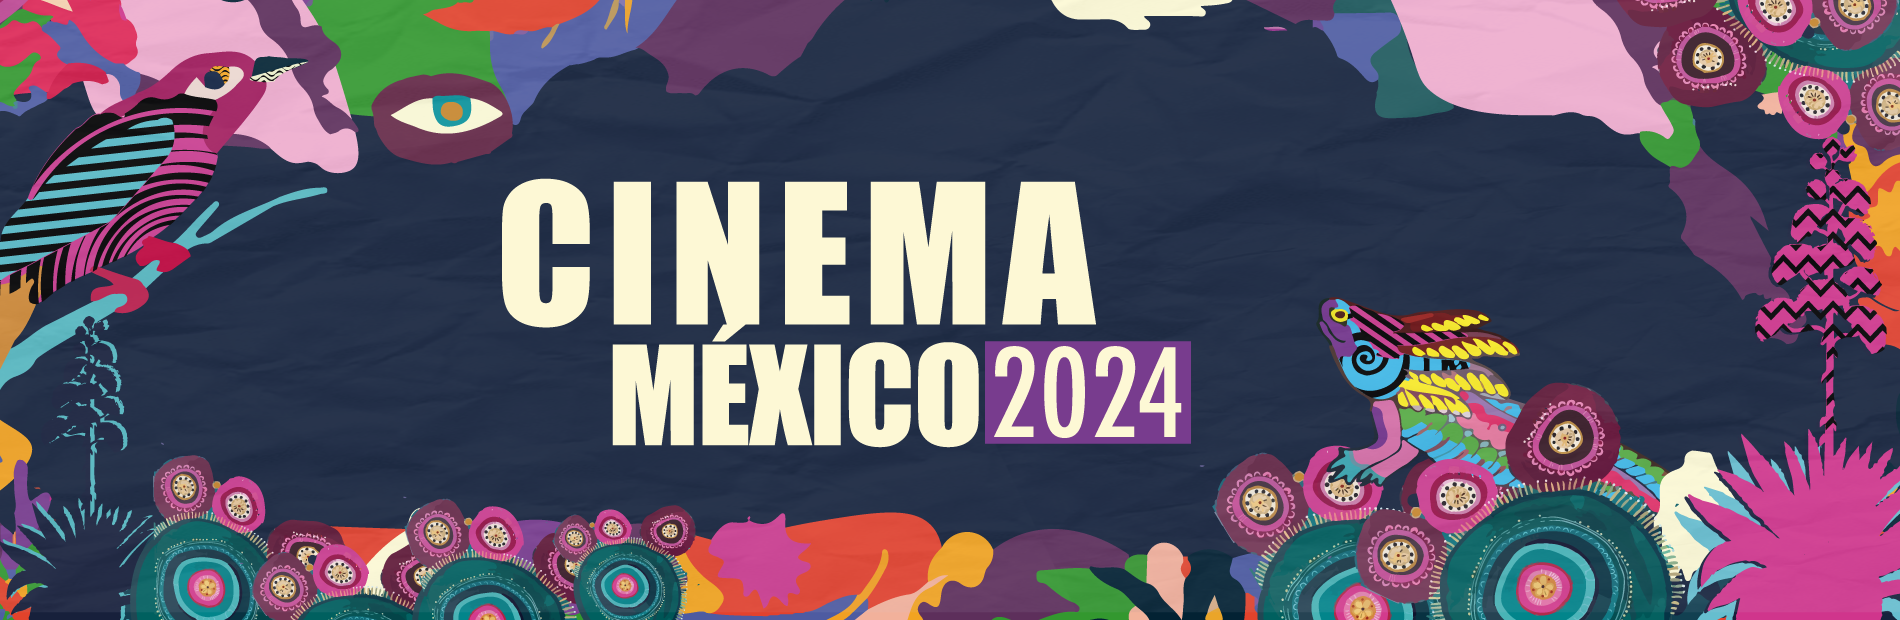 Cinema México 2024